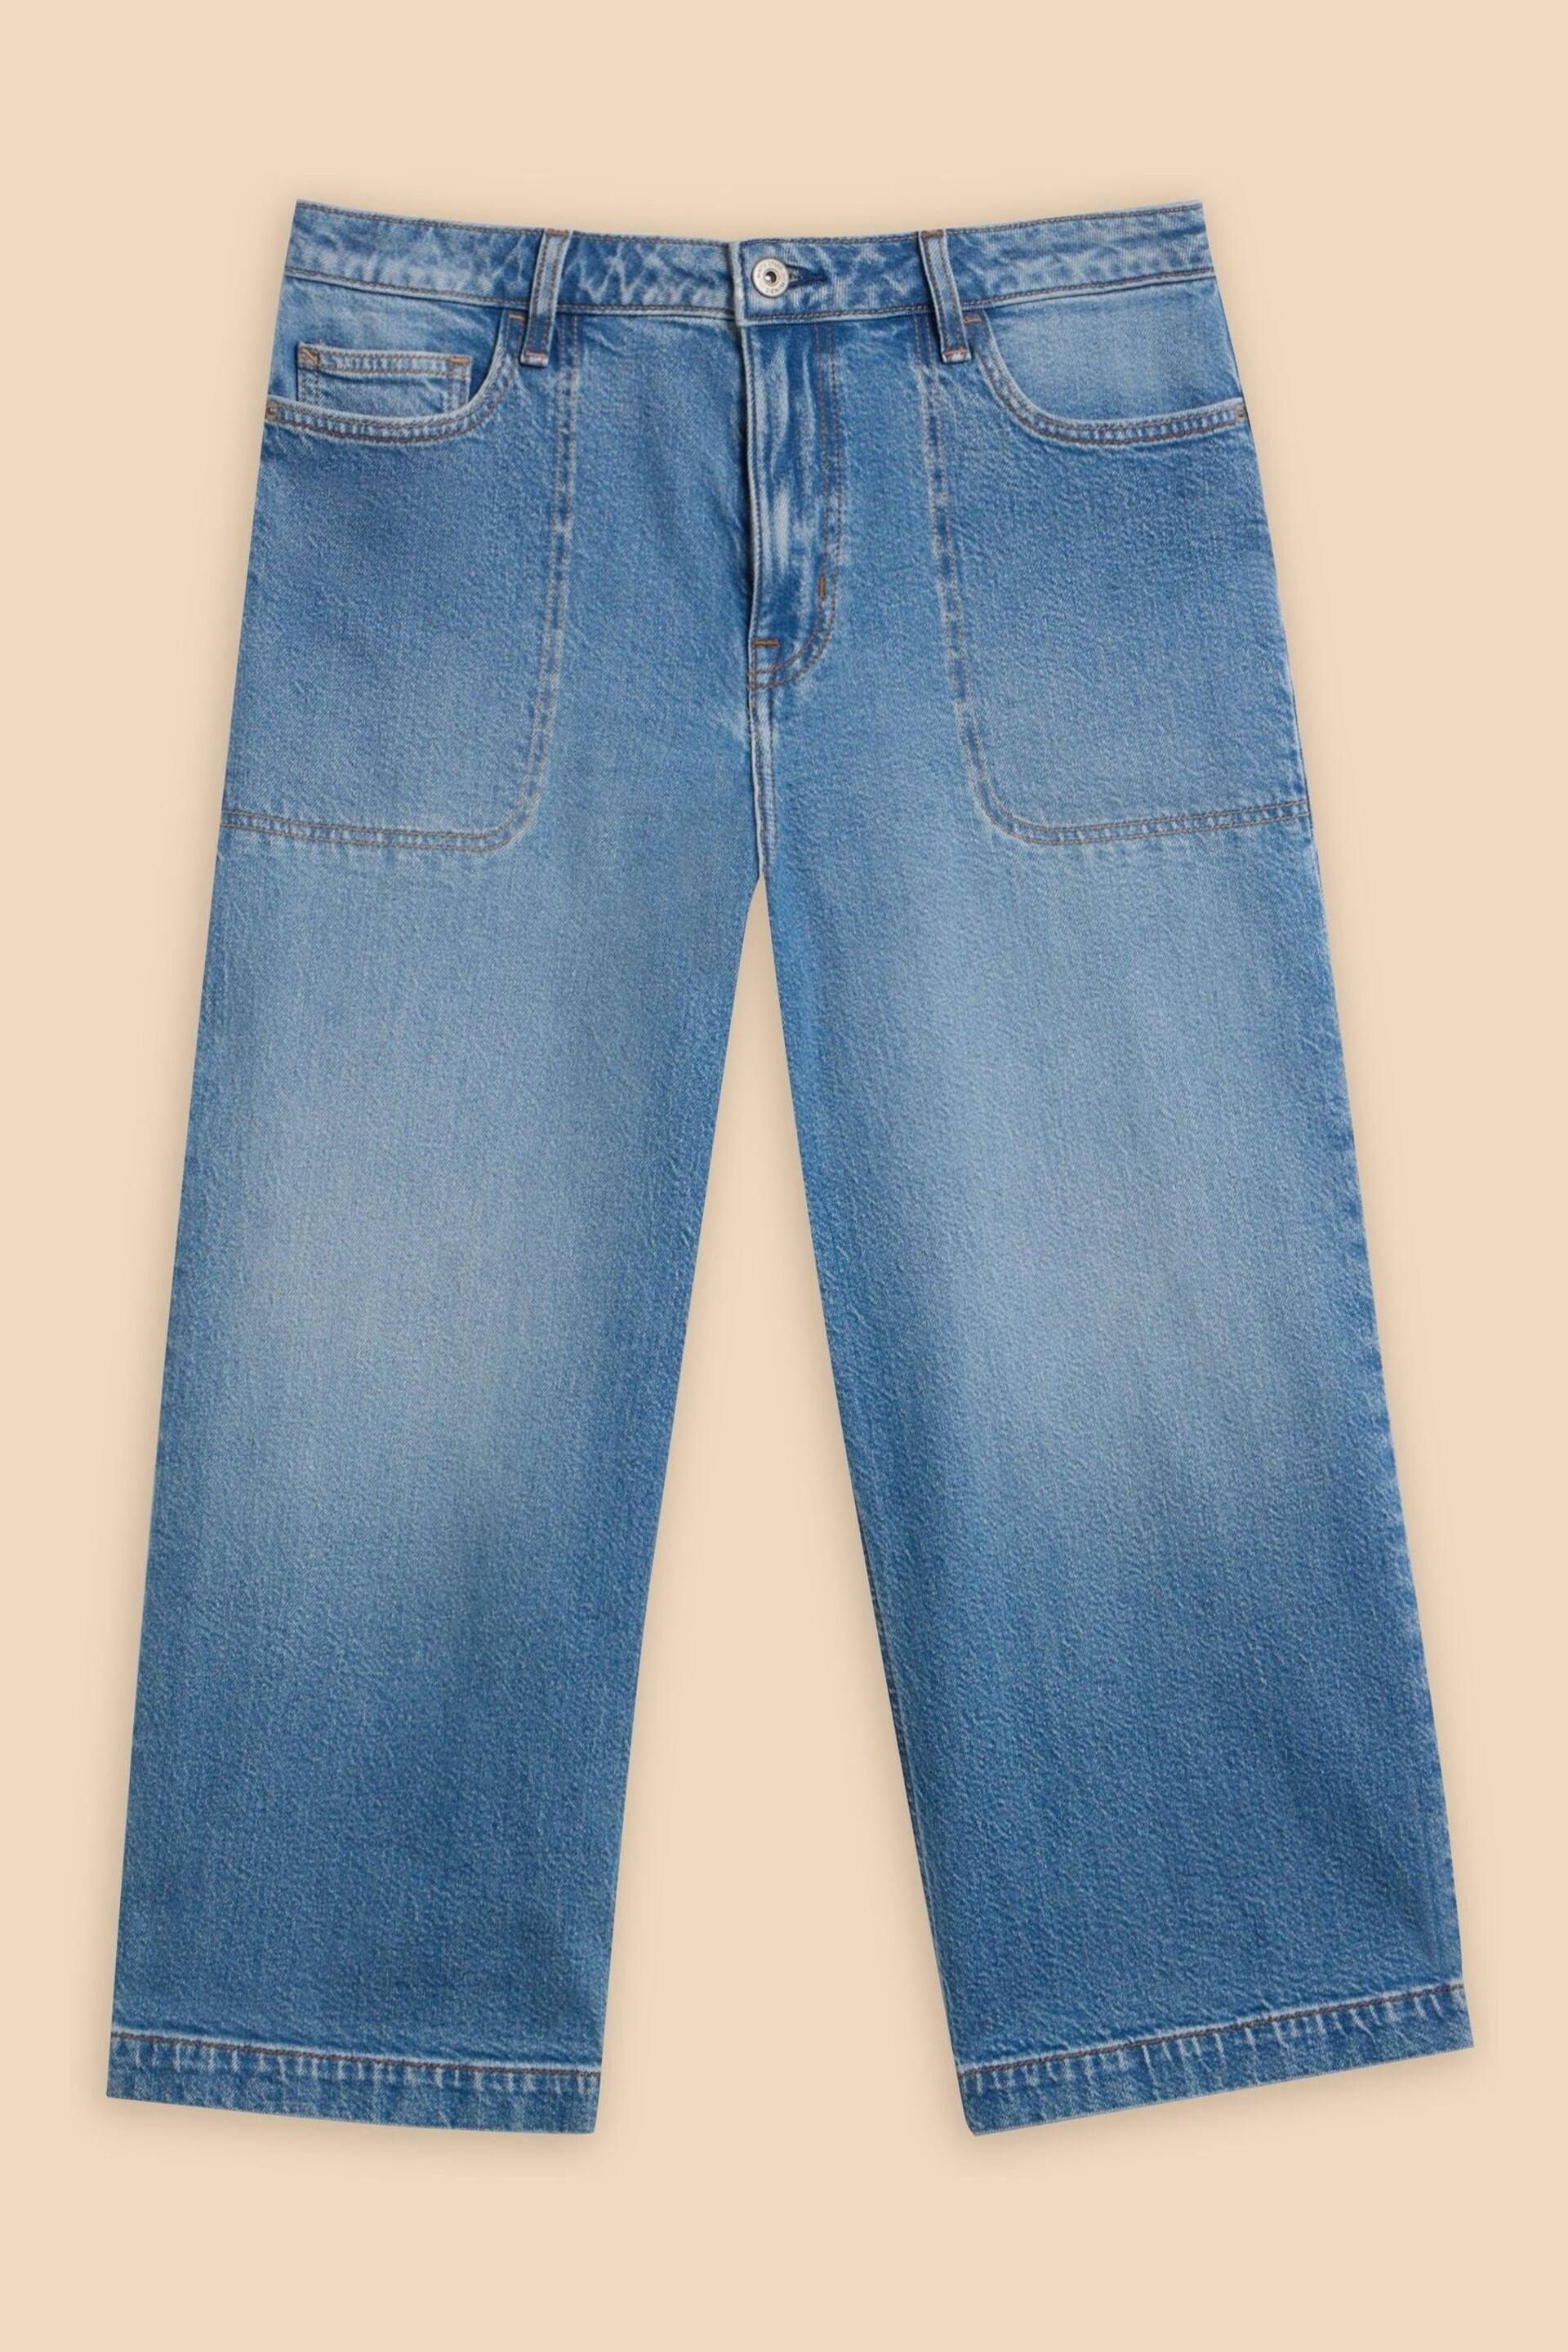 White Stuff Blue Tia Wide Leg Crop Jeans - Image 5 of 7